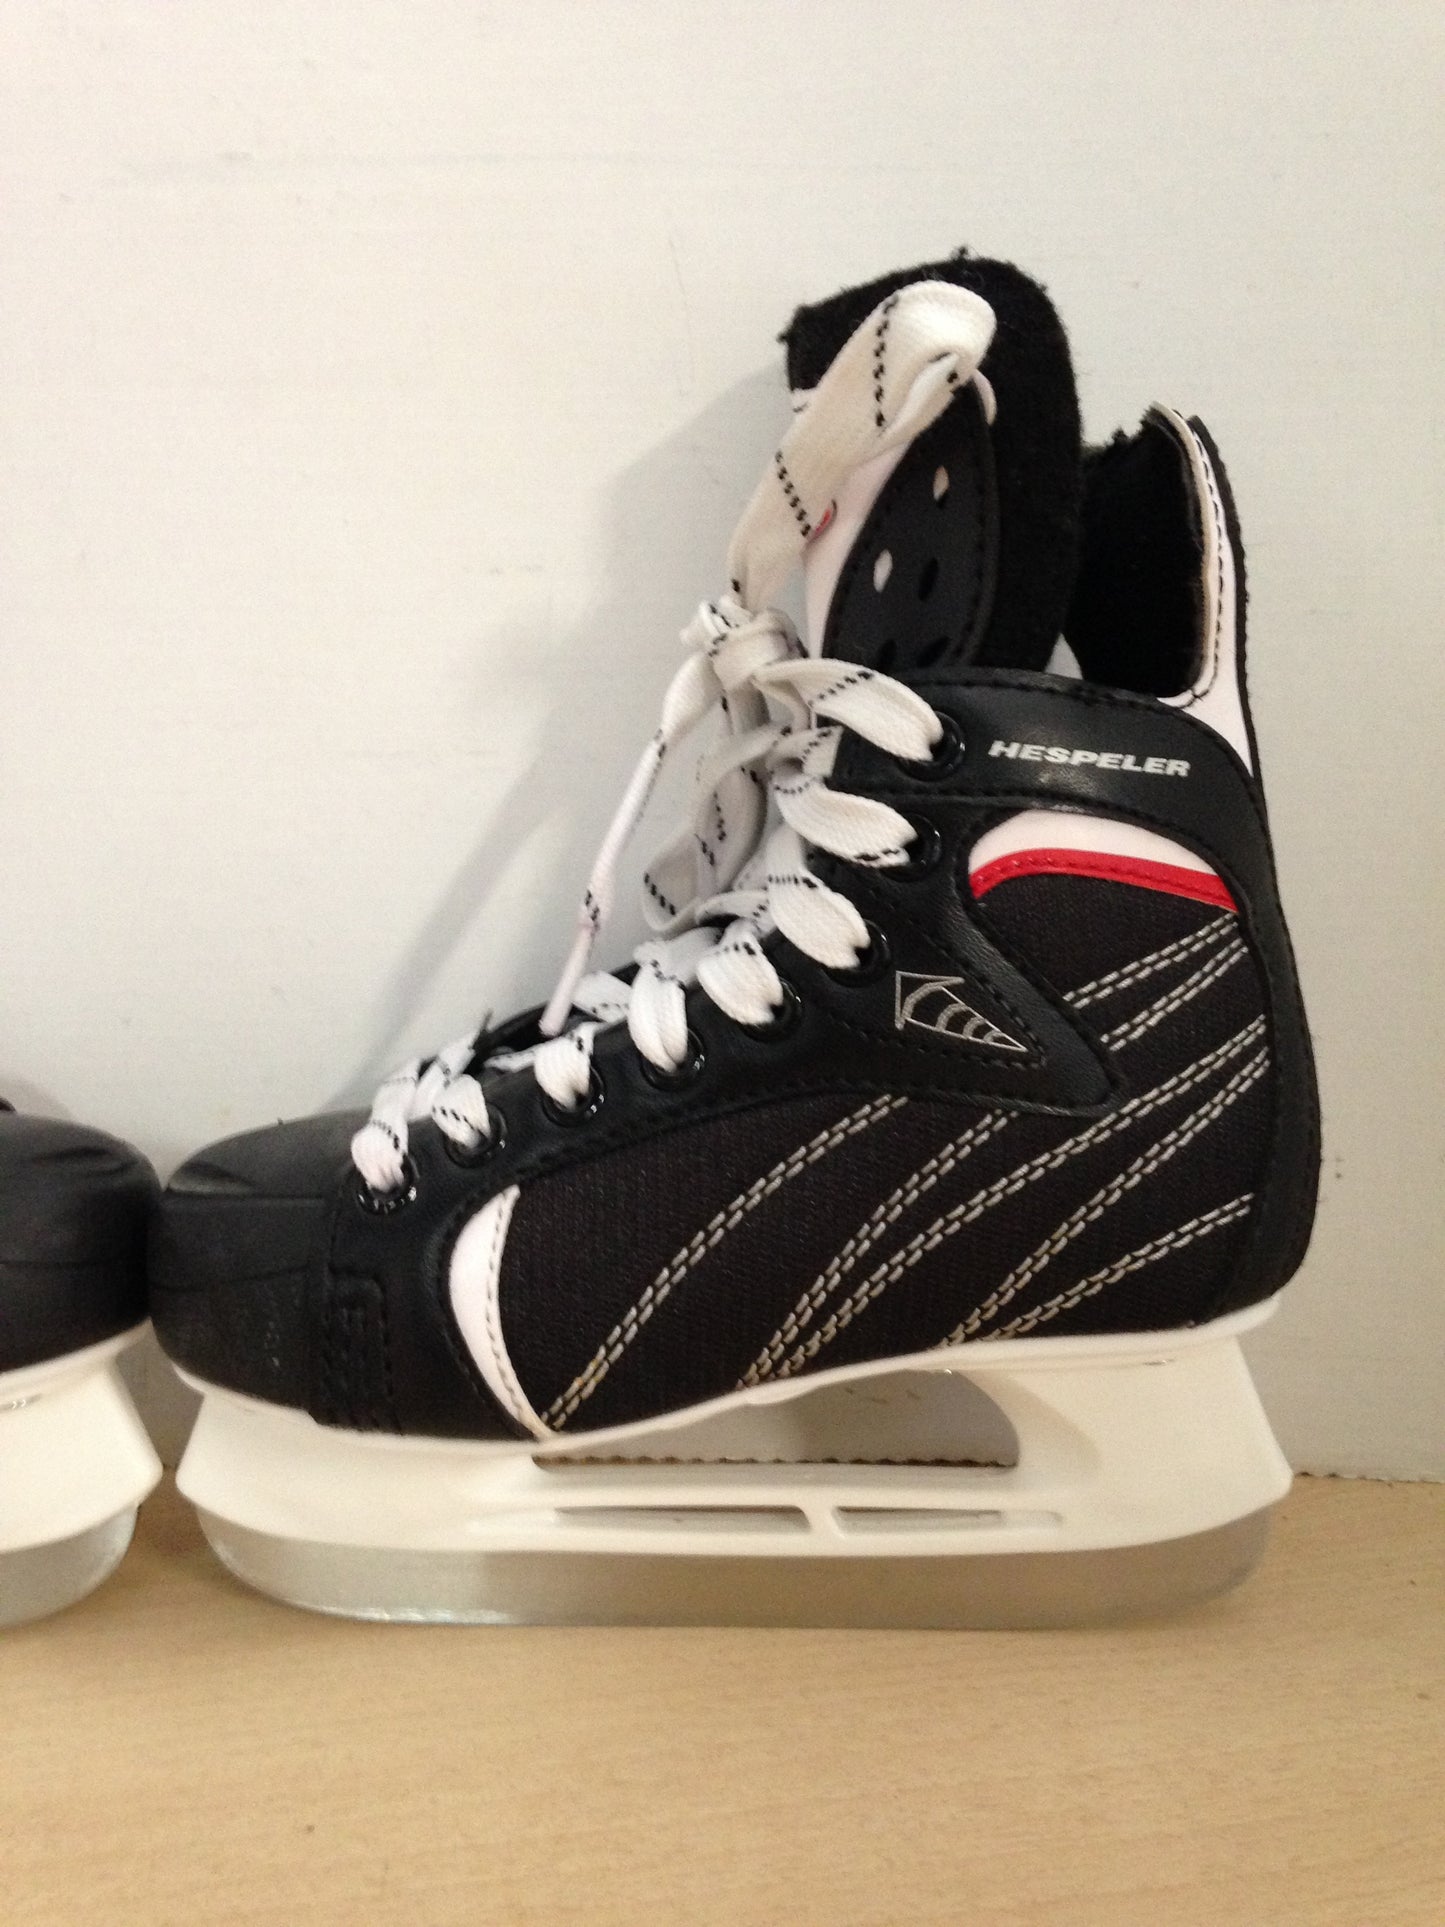 Hockey Skates Child Size 1 Shoe Size Hespeler New Demo